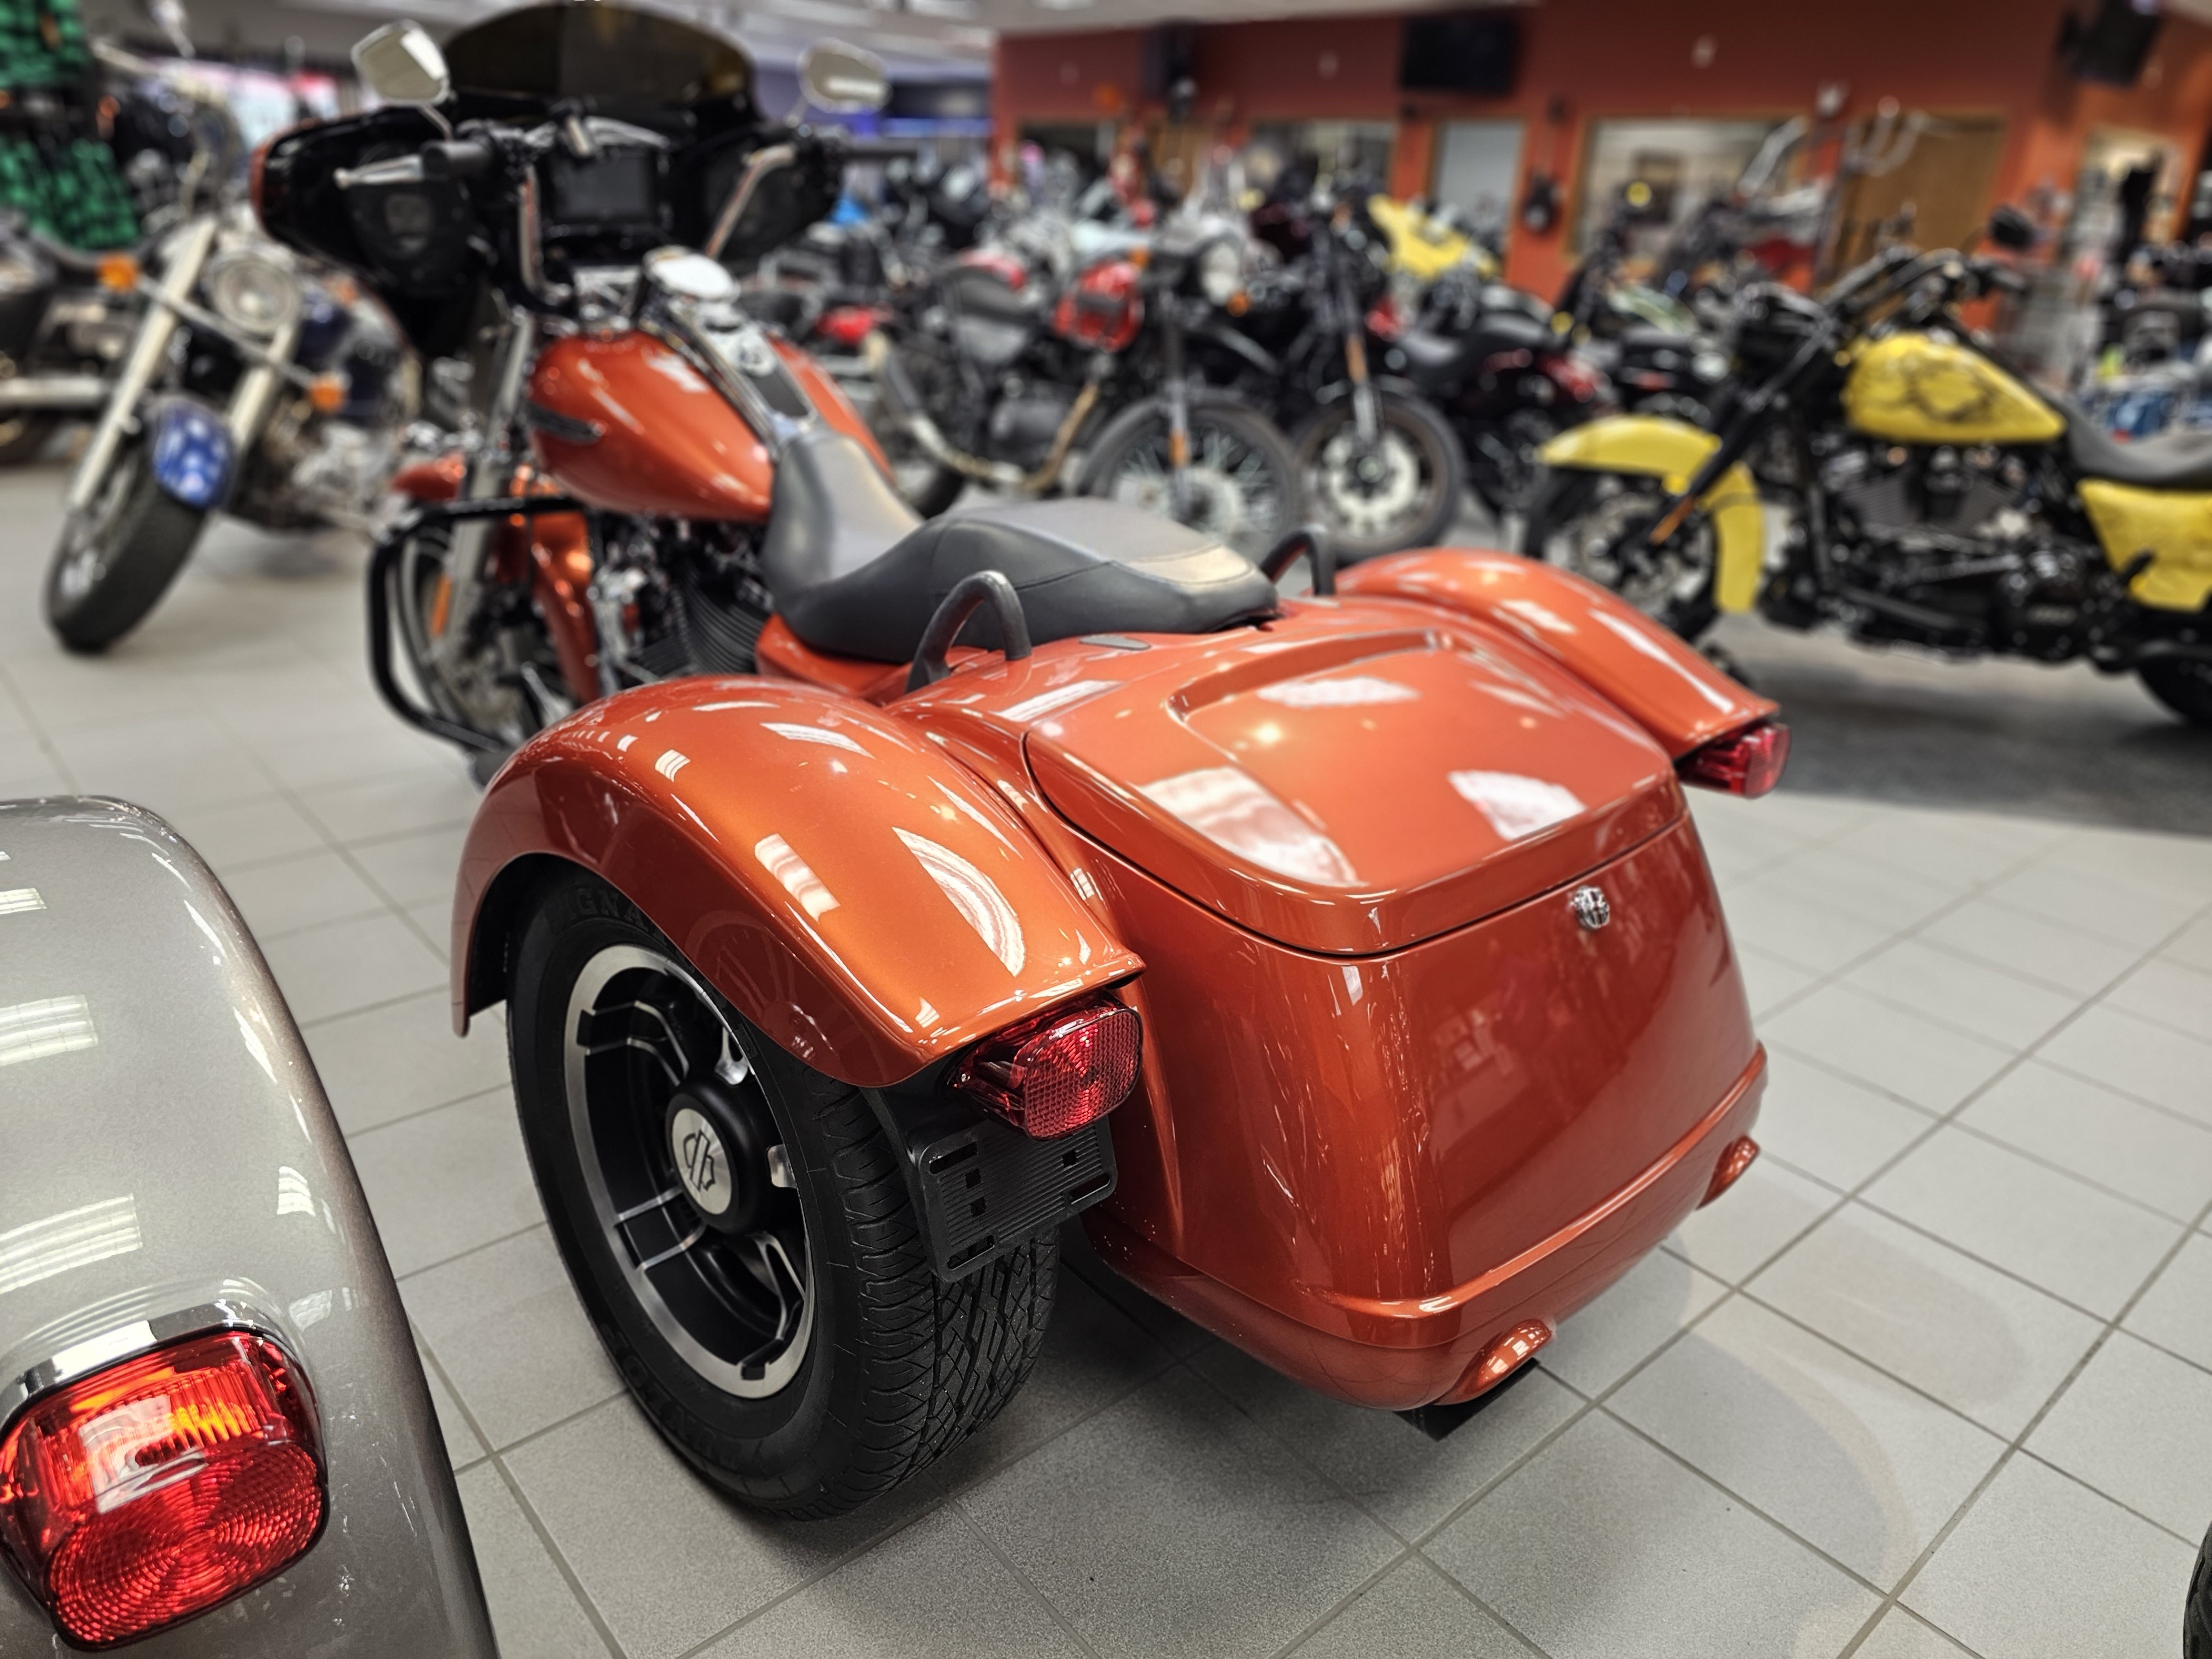 2019 Harley-Davidson Trike Freewheeler at Rooster's Harley Davidson